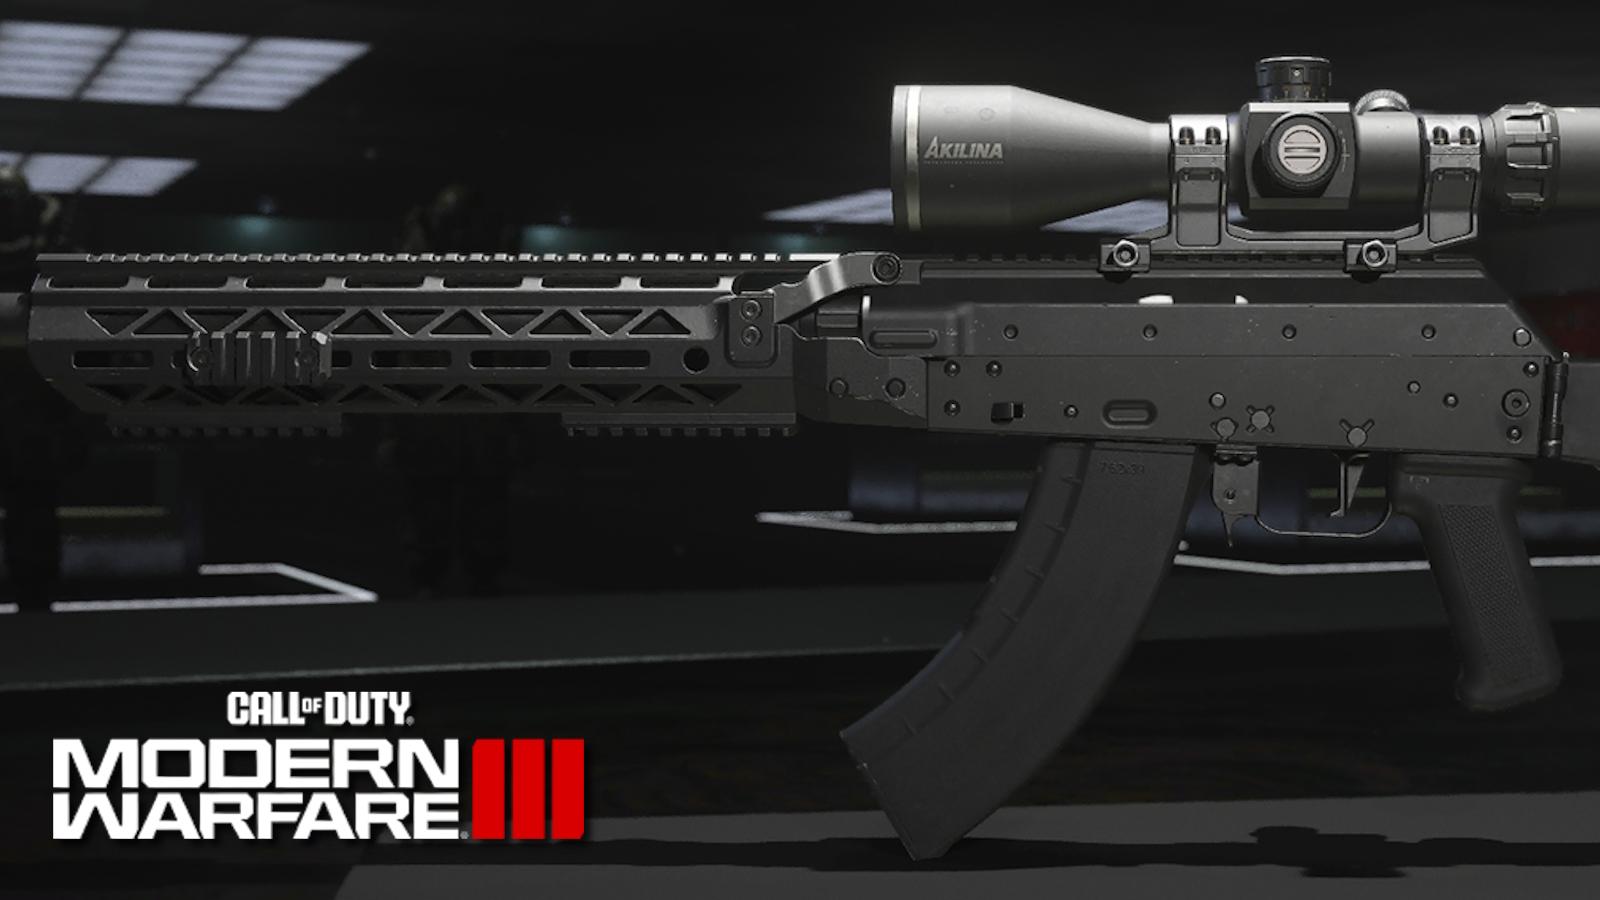 Longbow sniper rifle in Modern Warfare 3.